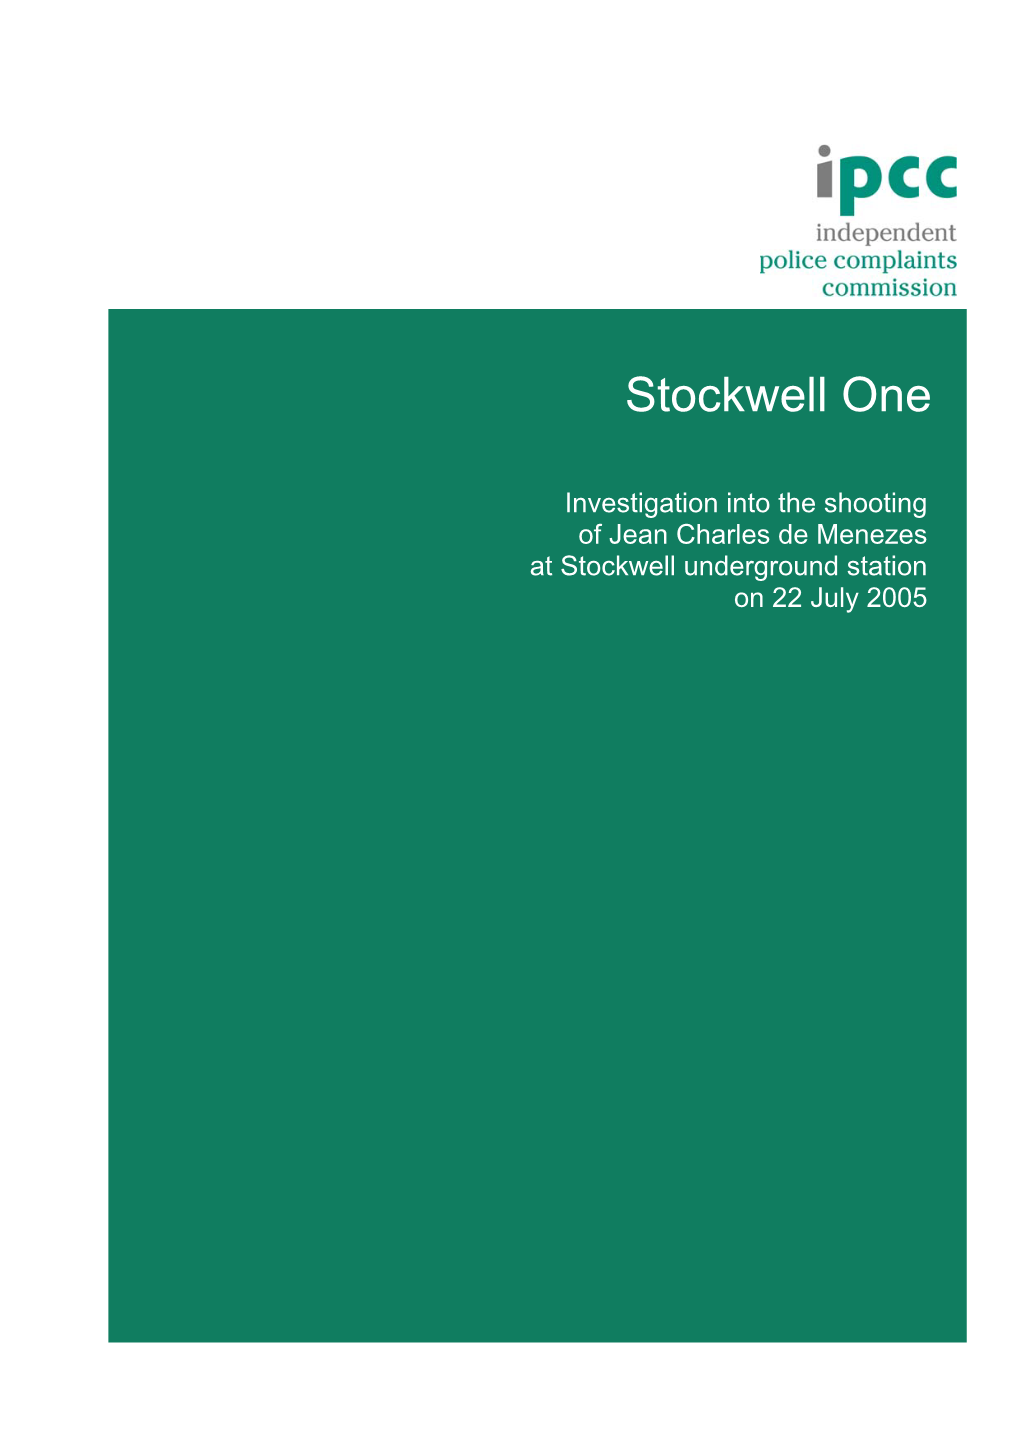 IPCC Stockwell 1 Investigation Begins